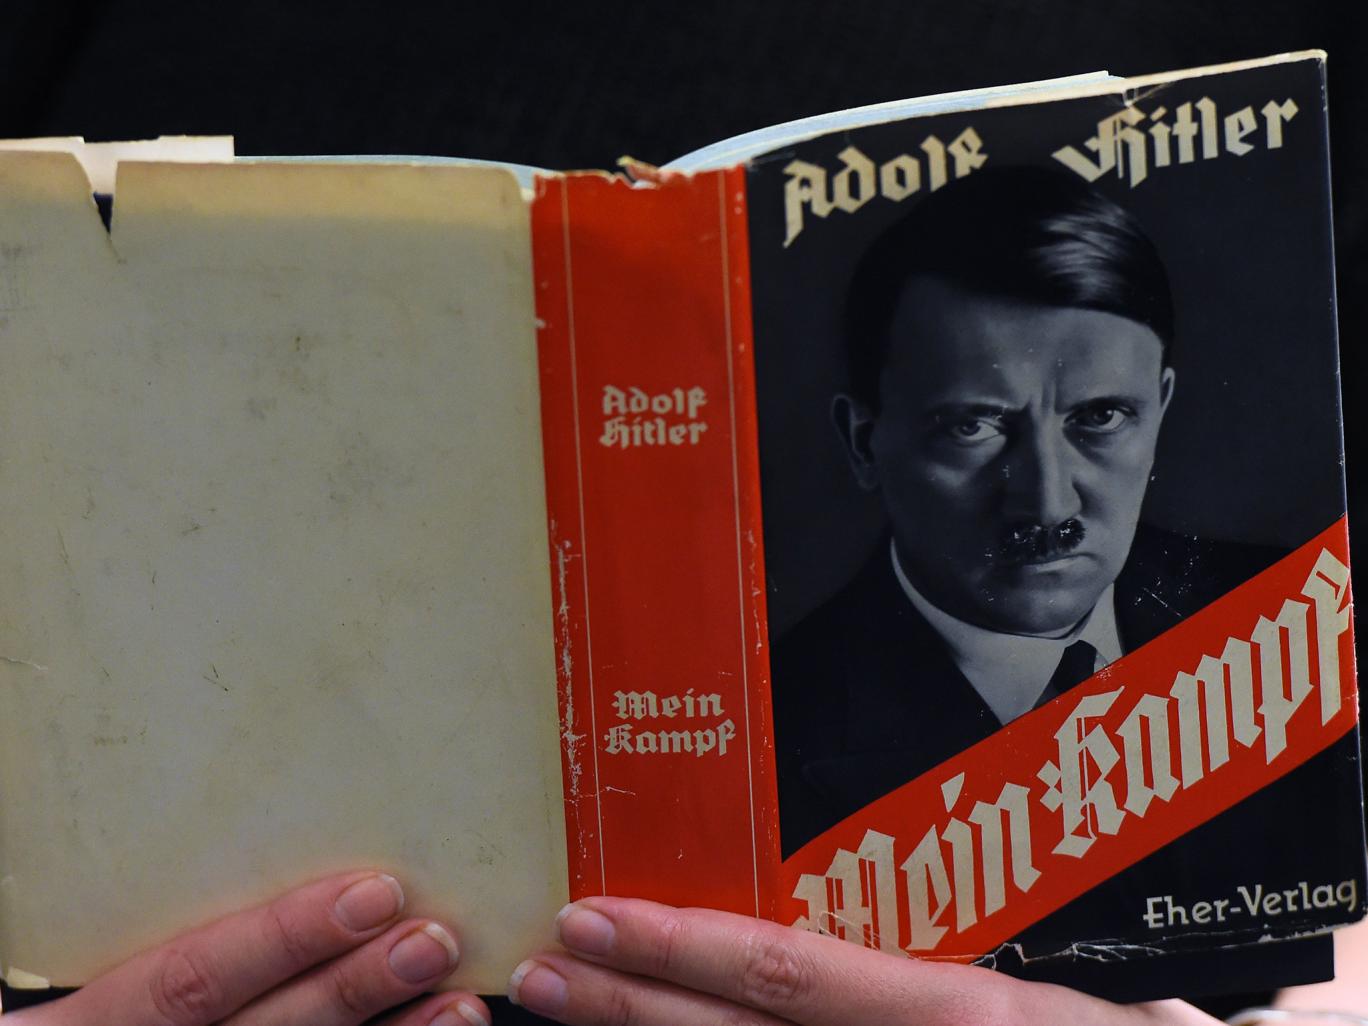 Italian schoolchildren choose Adolf Hitler’s Mein Kampf as one of their favourite books in national survey